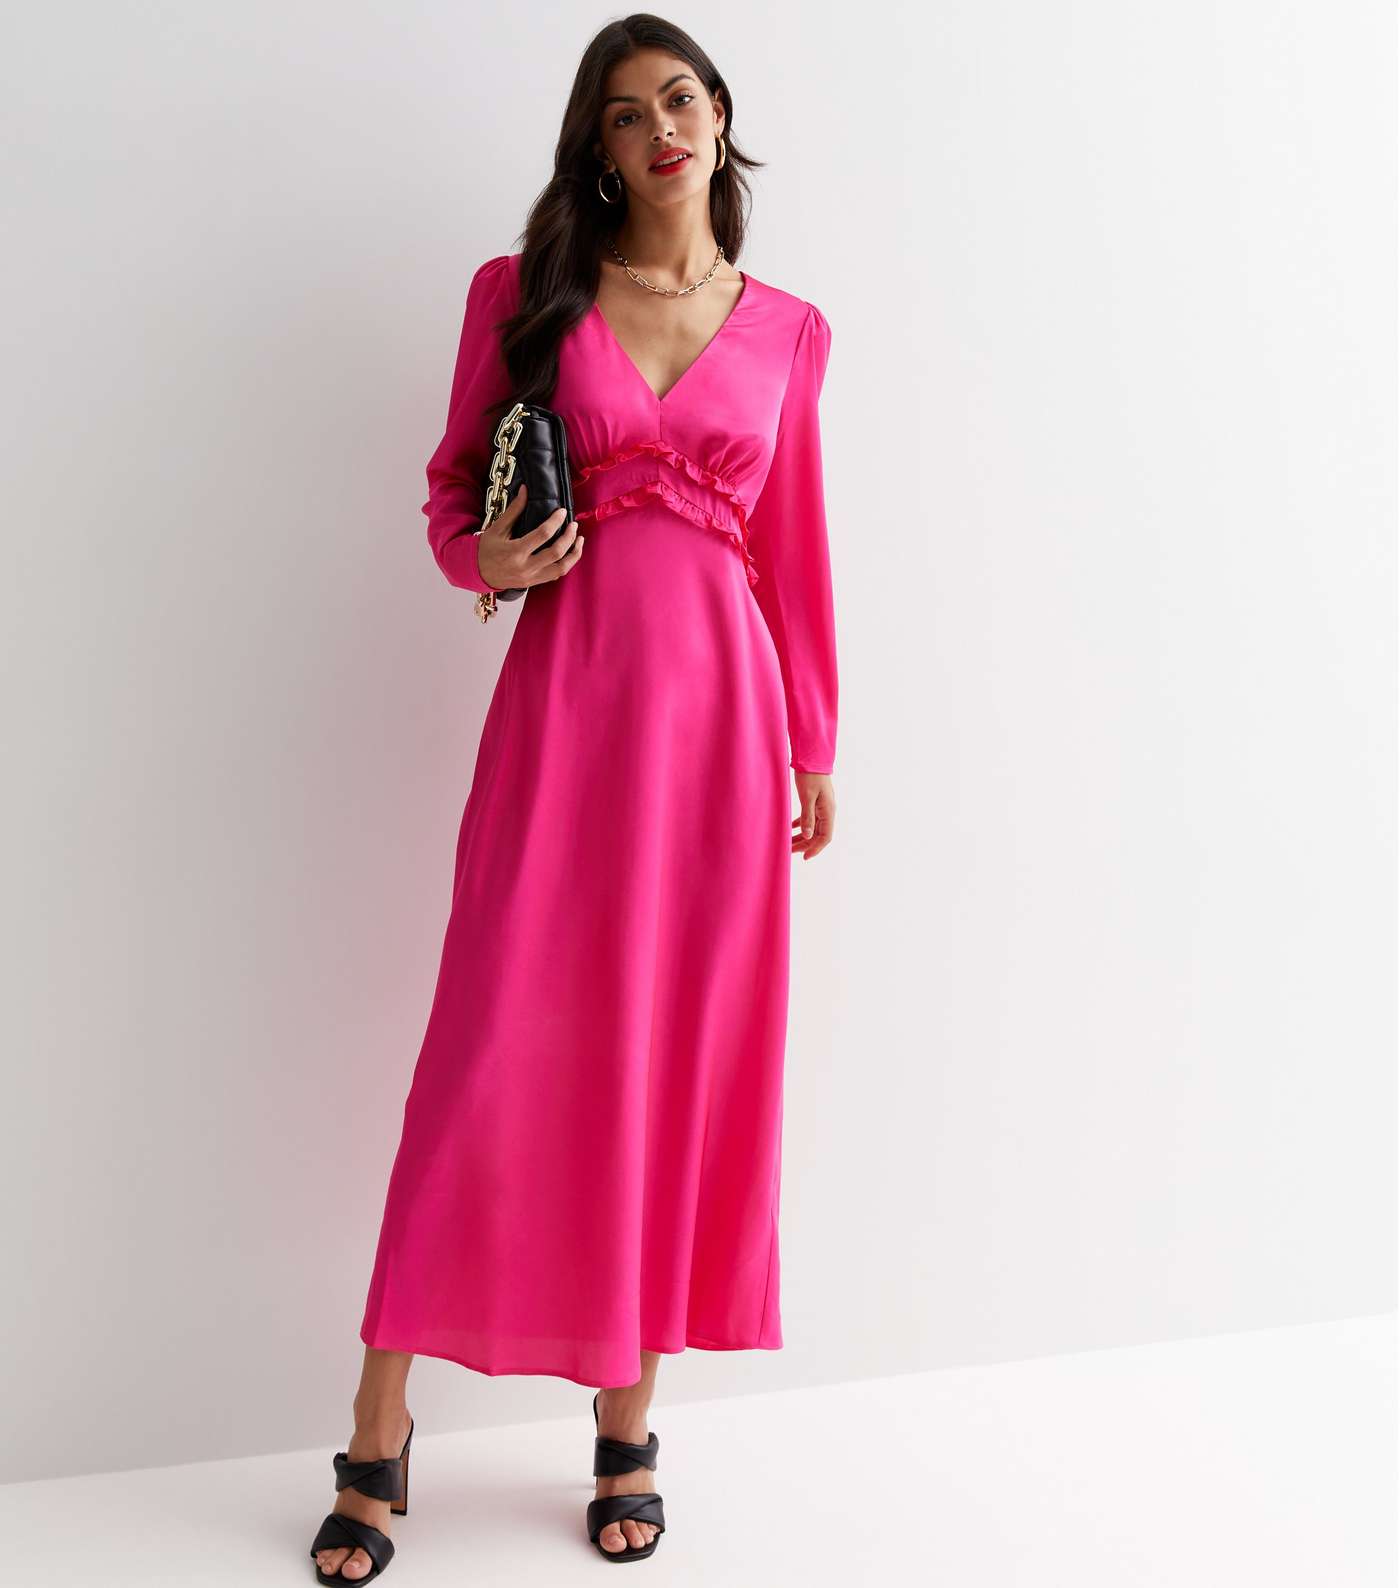 Bright Pink Satin V Neck Long Sleeve Frill Detail Midi Dress Image 2